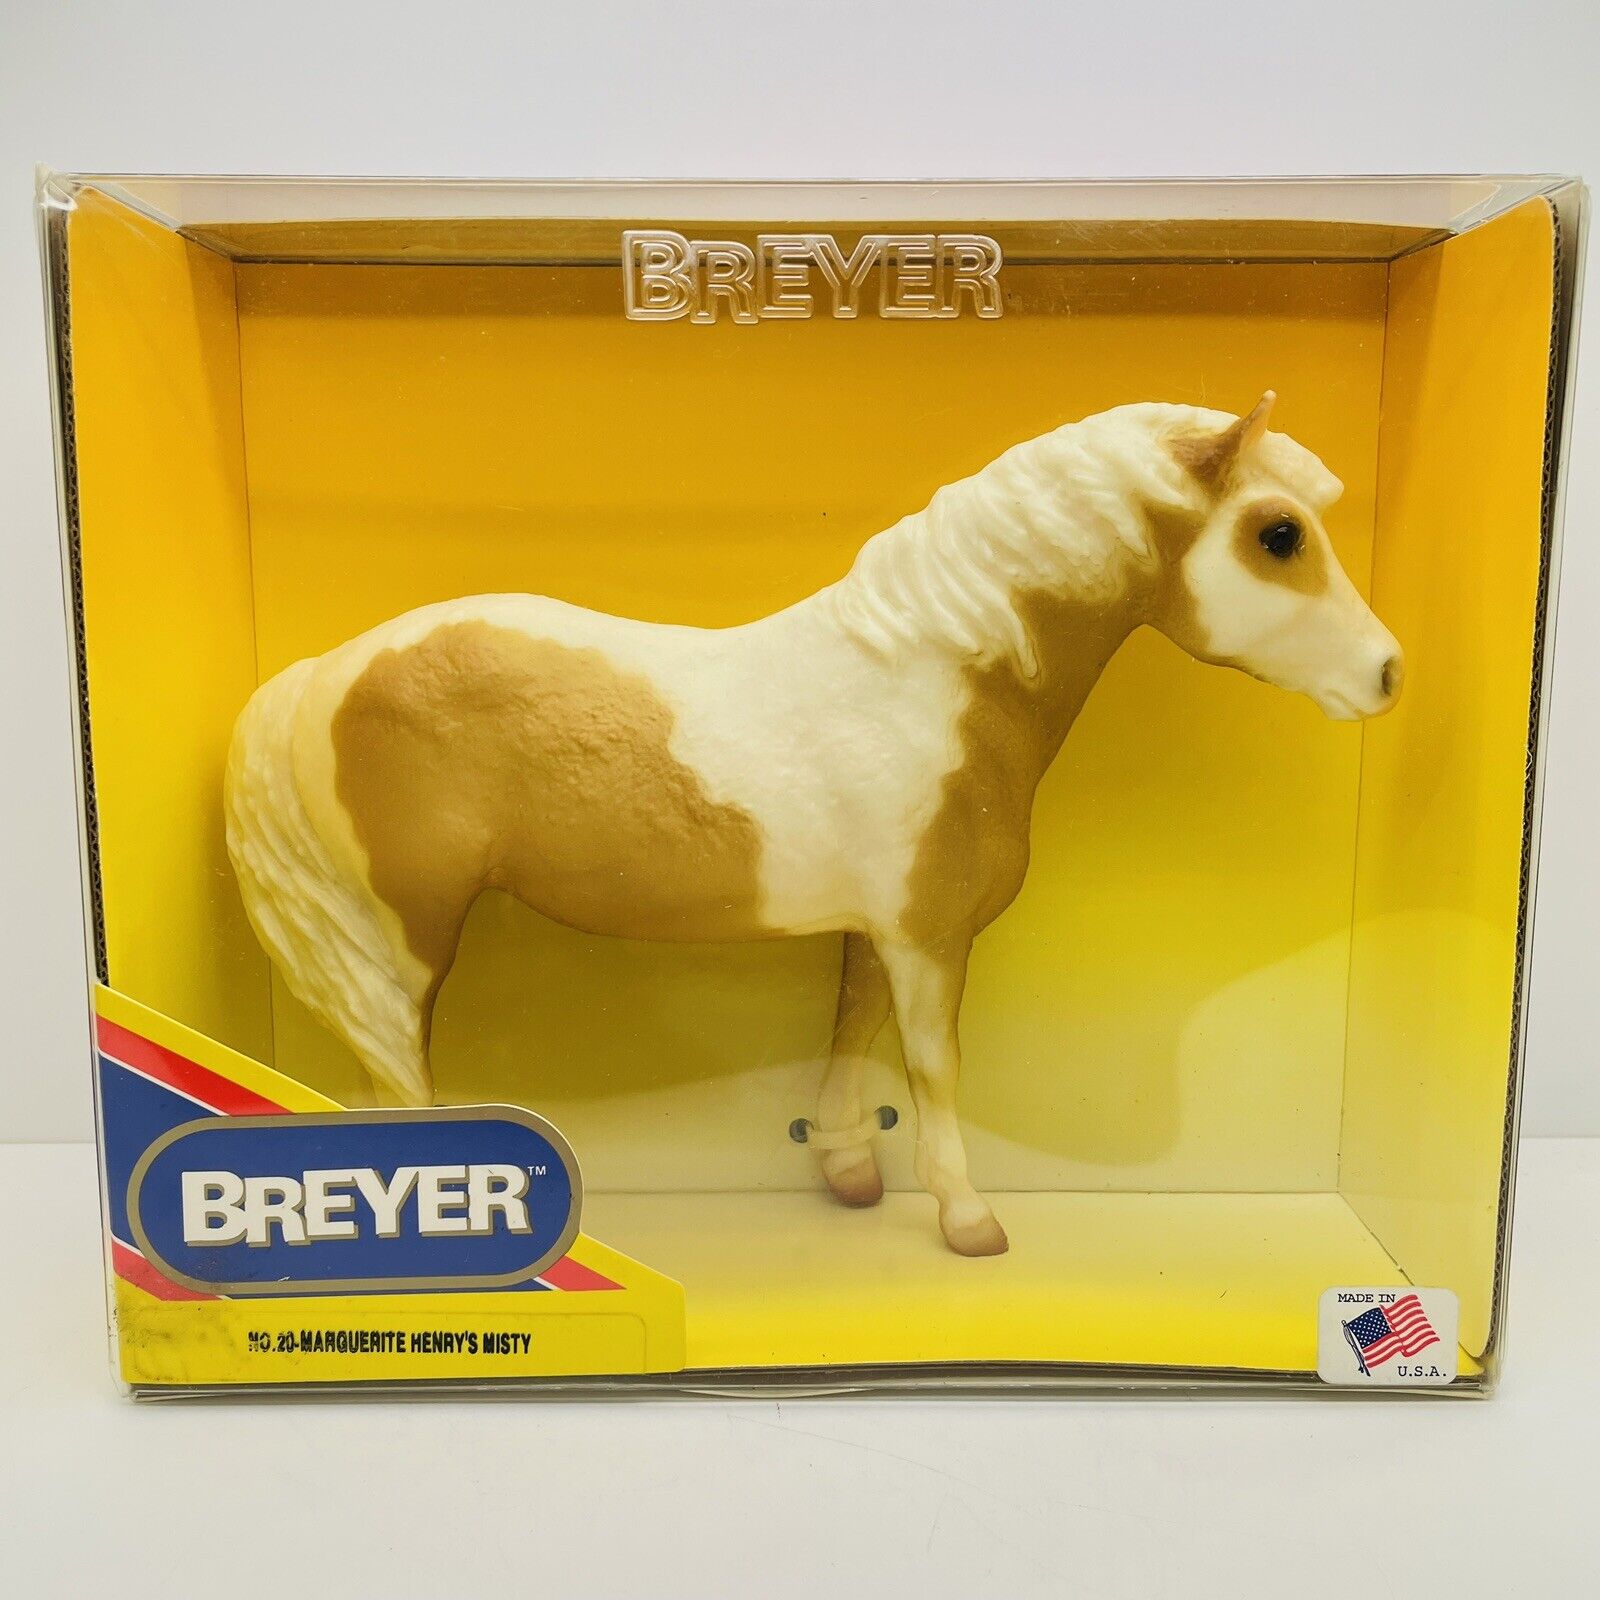 Breyer Vintage Horse No. 20 Marguerite Henry\'s Misty White and Tan NIB USA Made